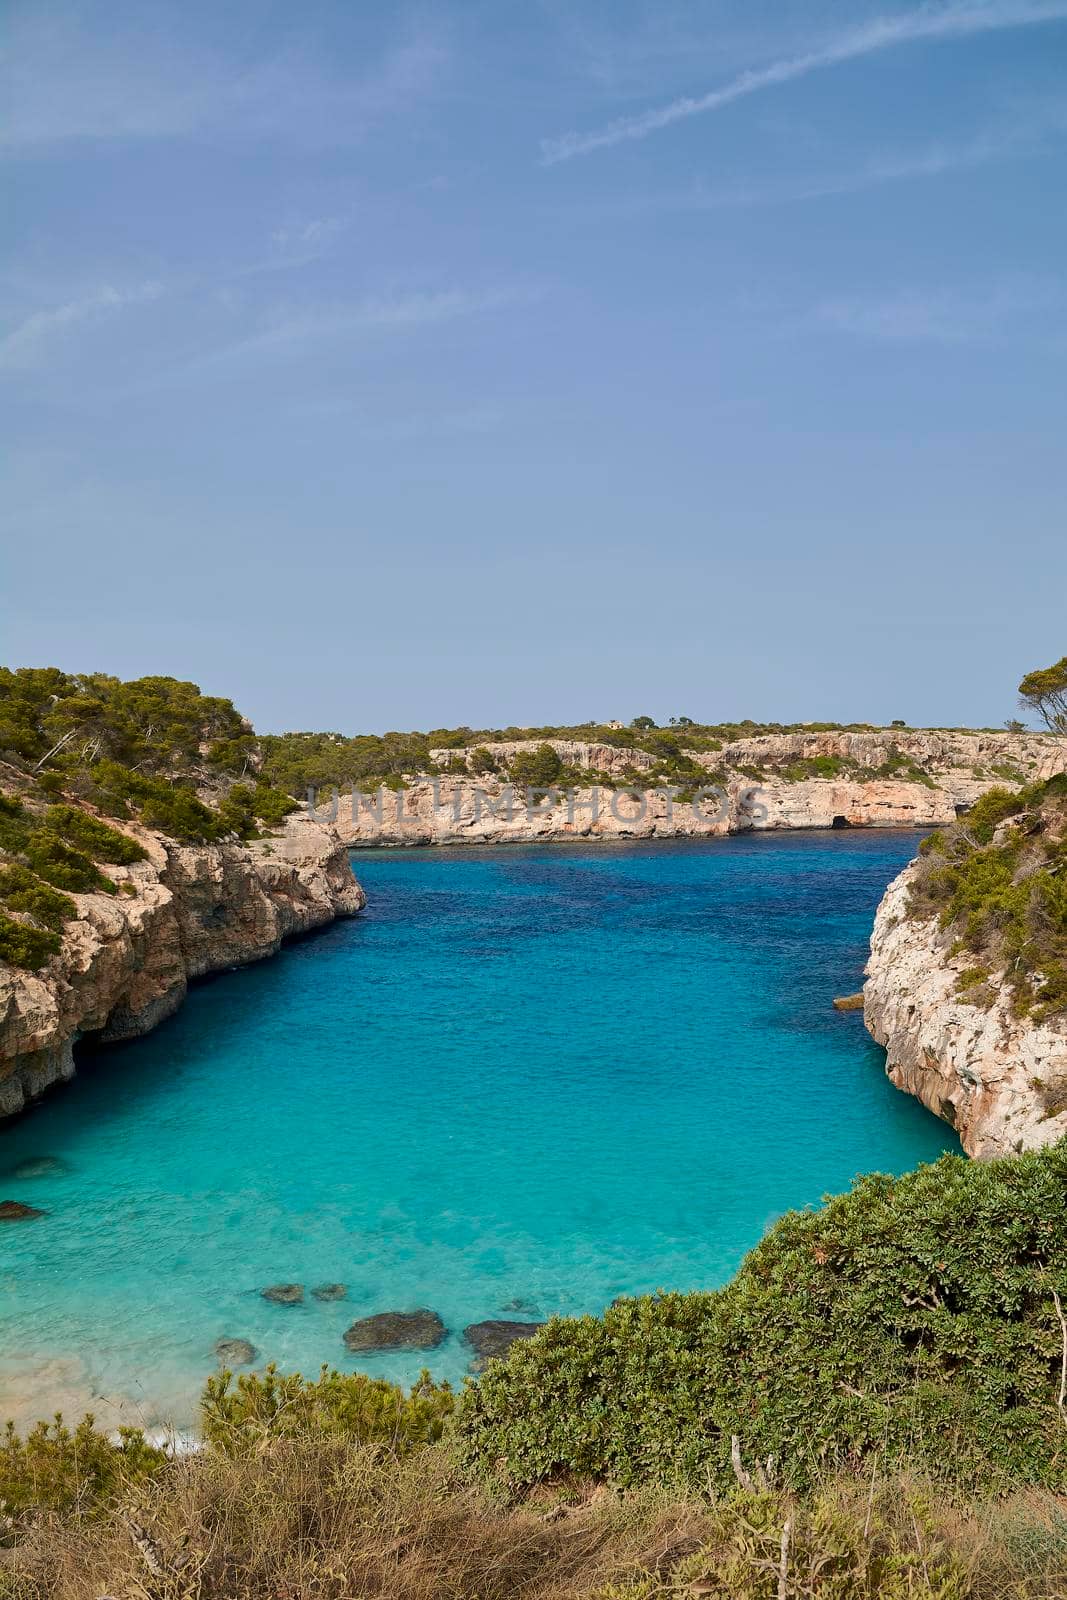 Paradise beach on the Mediterranean Sea, Transparent water by raul_ruiz